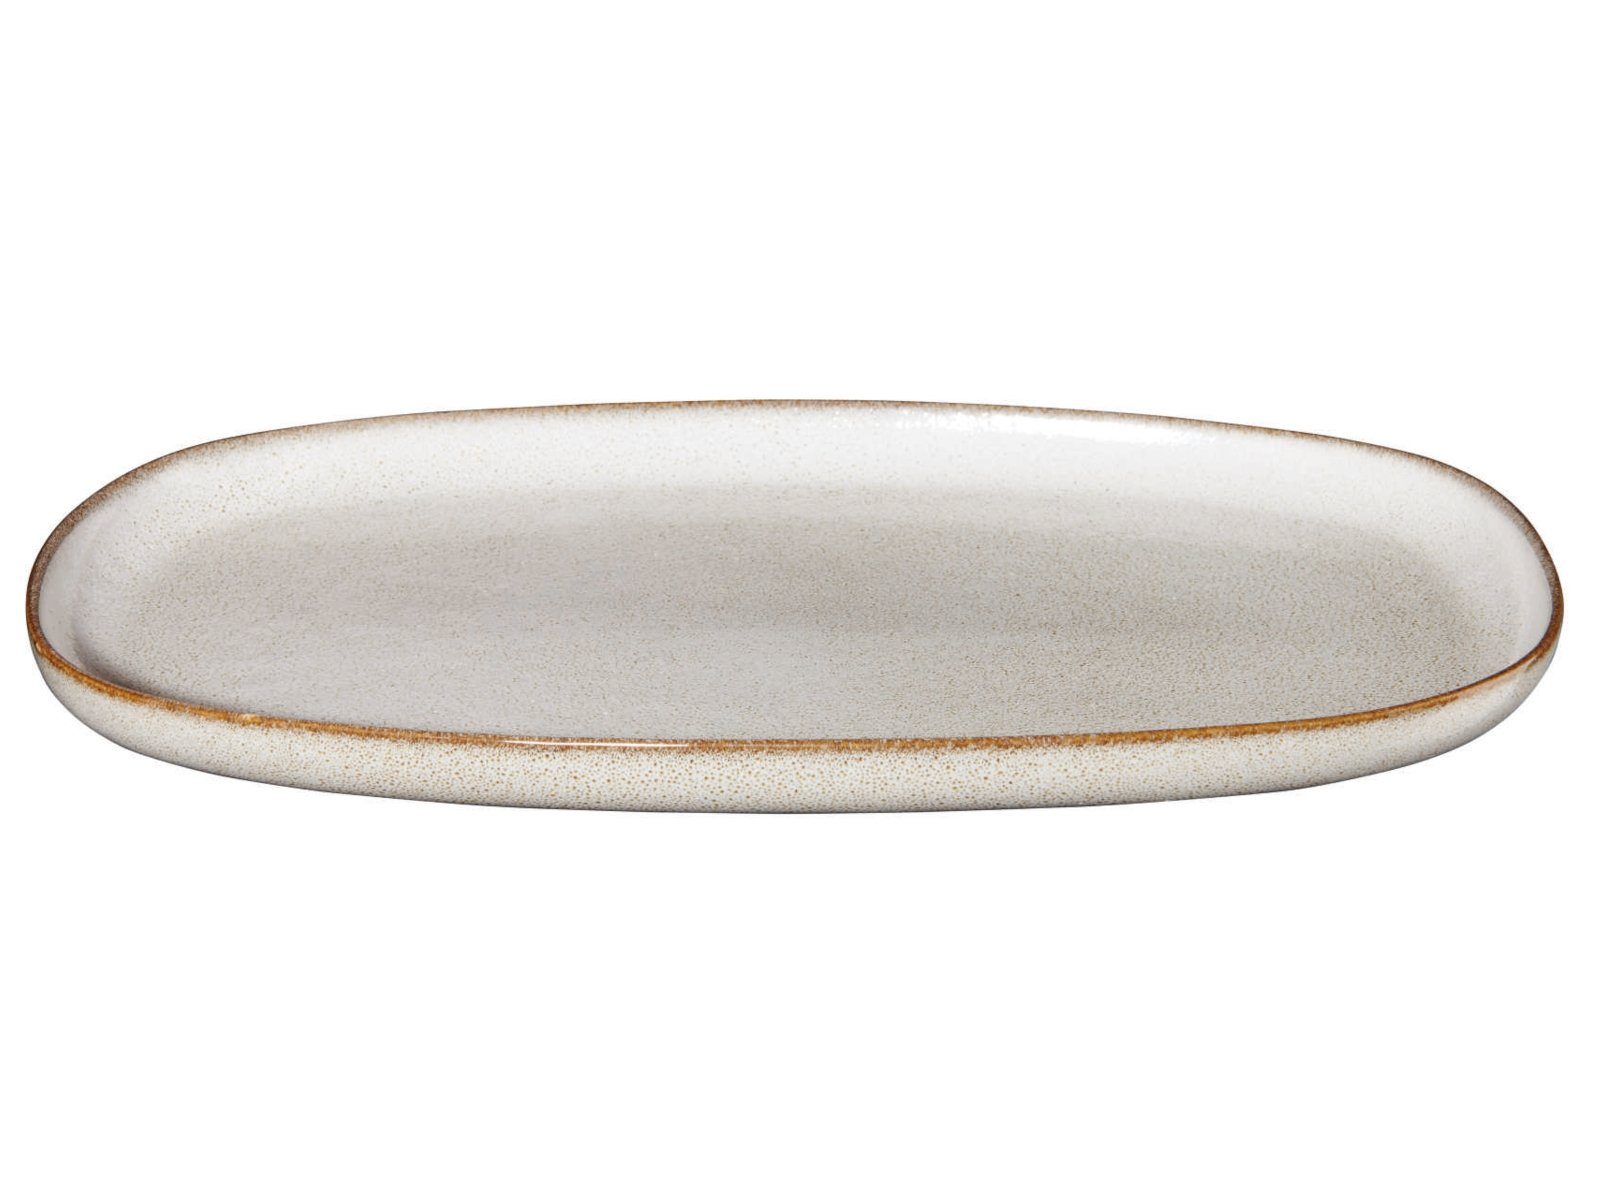 ASA SELECTION Servierplatte SAISONS Platte oval sand 31 x 18 cm, Steinzeug, (Platte oval)